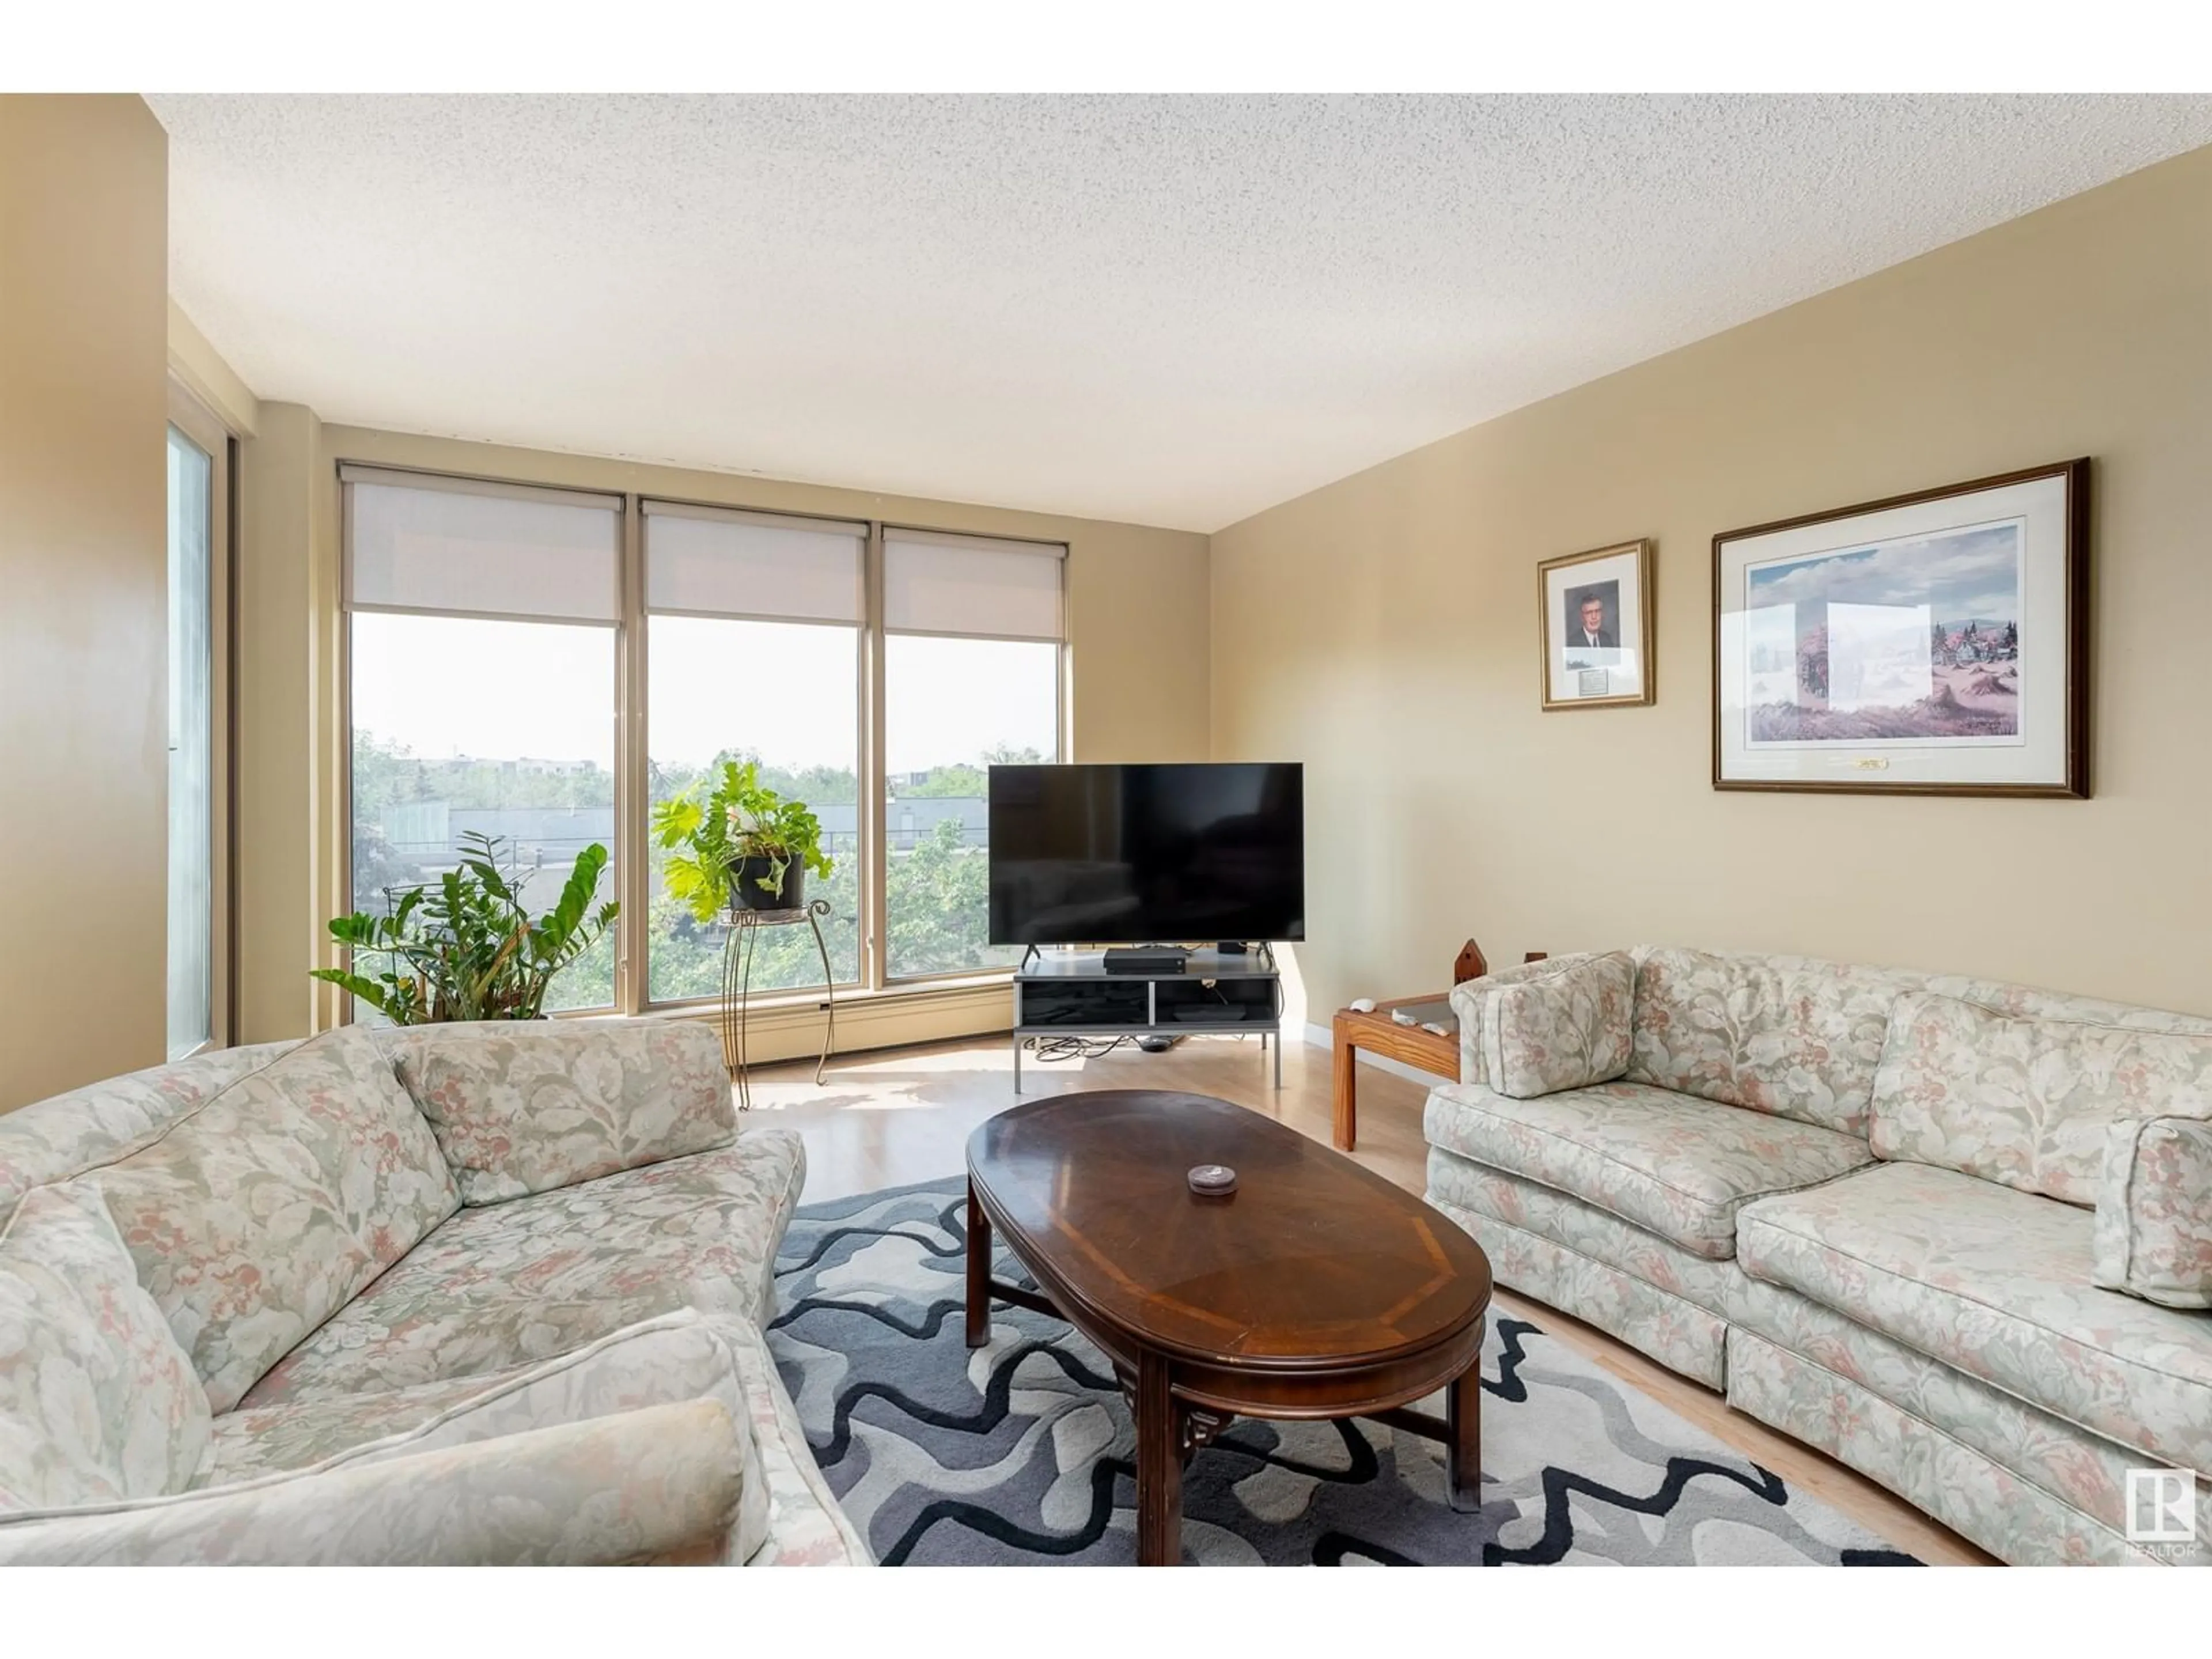 Living room for #510 10149 SASKATCHEWAN DR NW, Edmonton Alberta T6E6B6